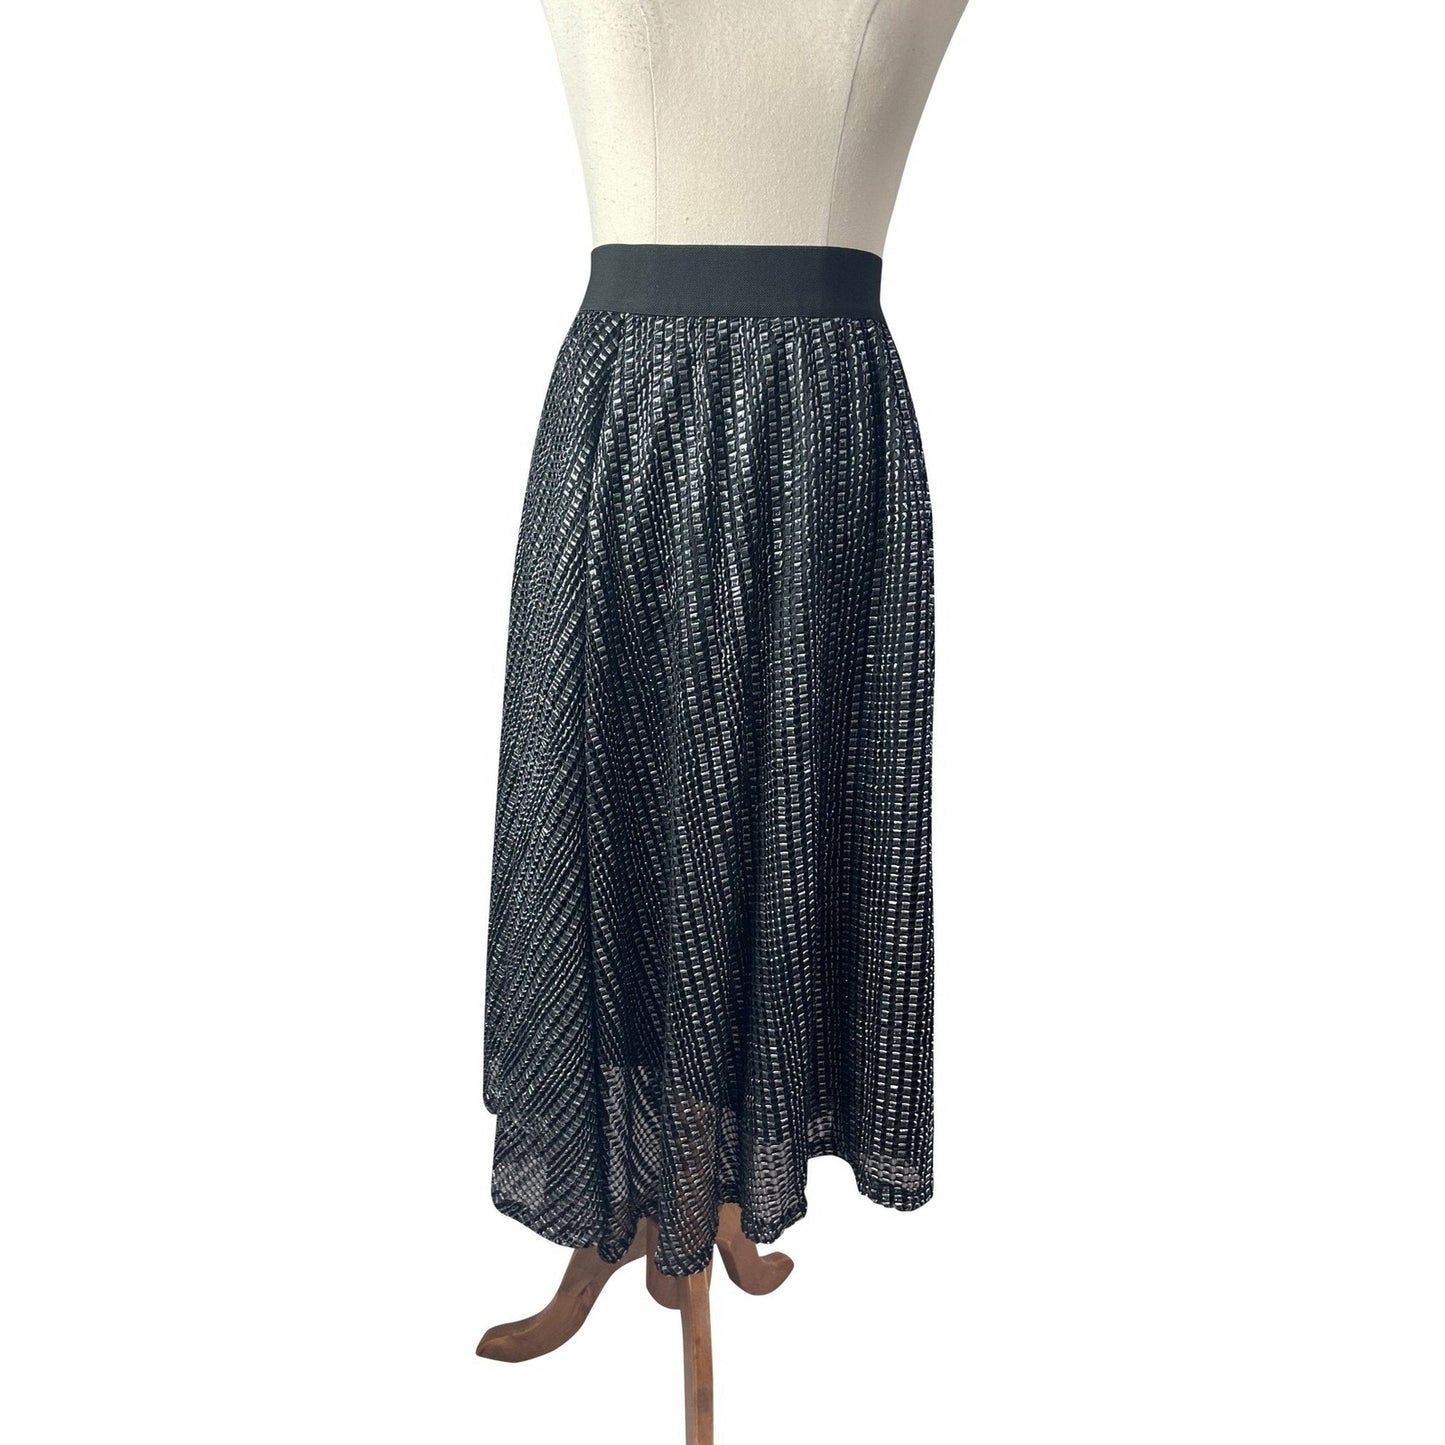 Black w/ silver effect midi skirt | size 8-10